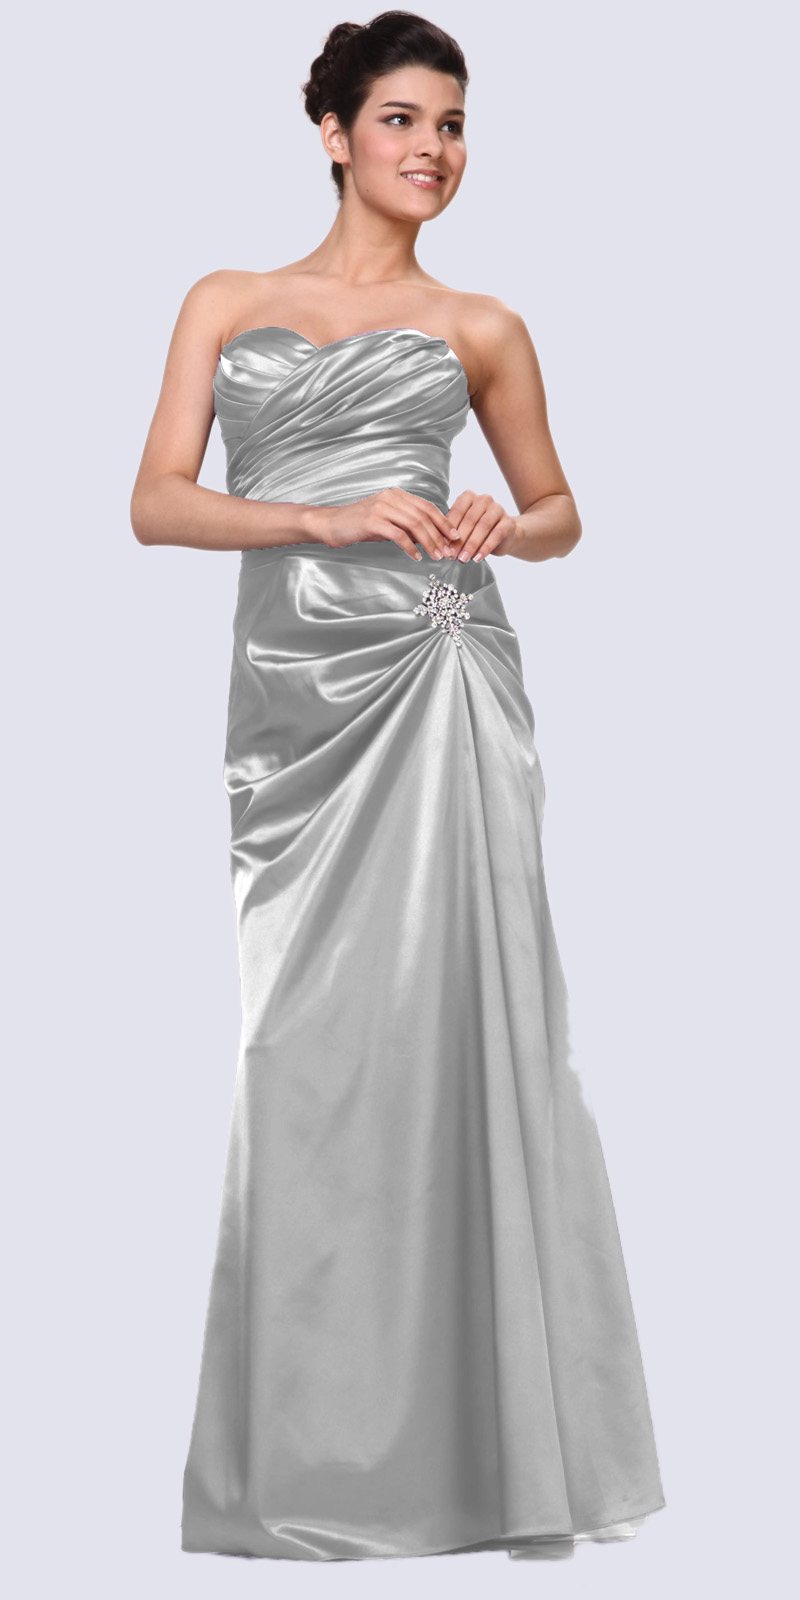 silver satin dress